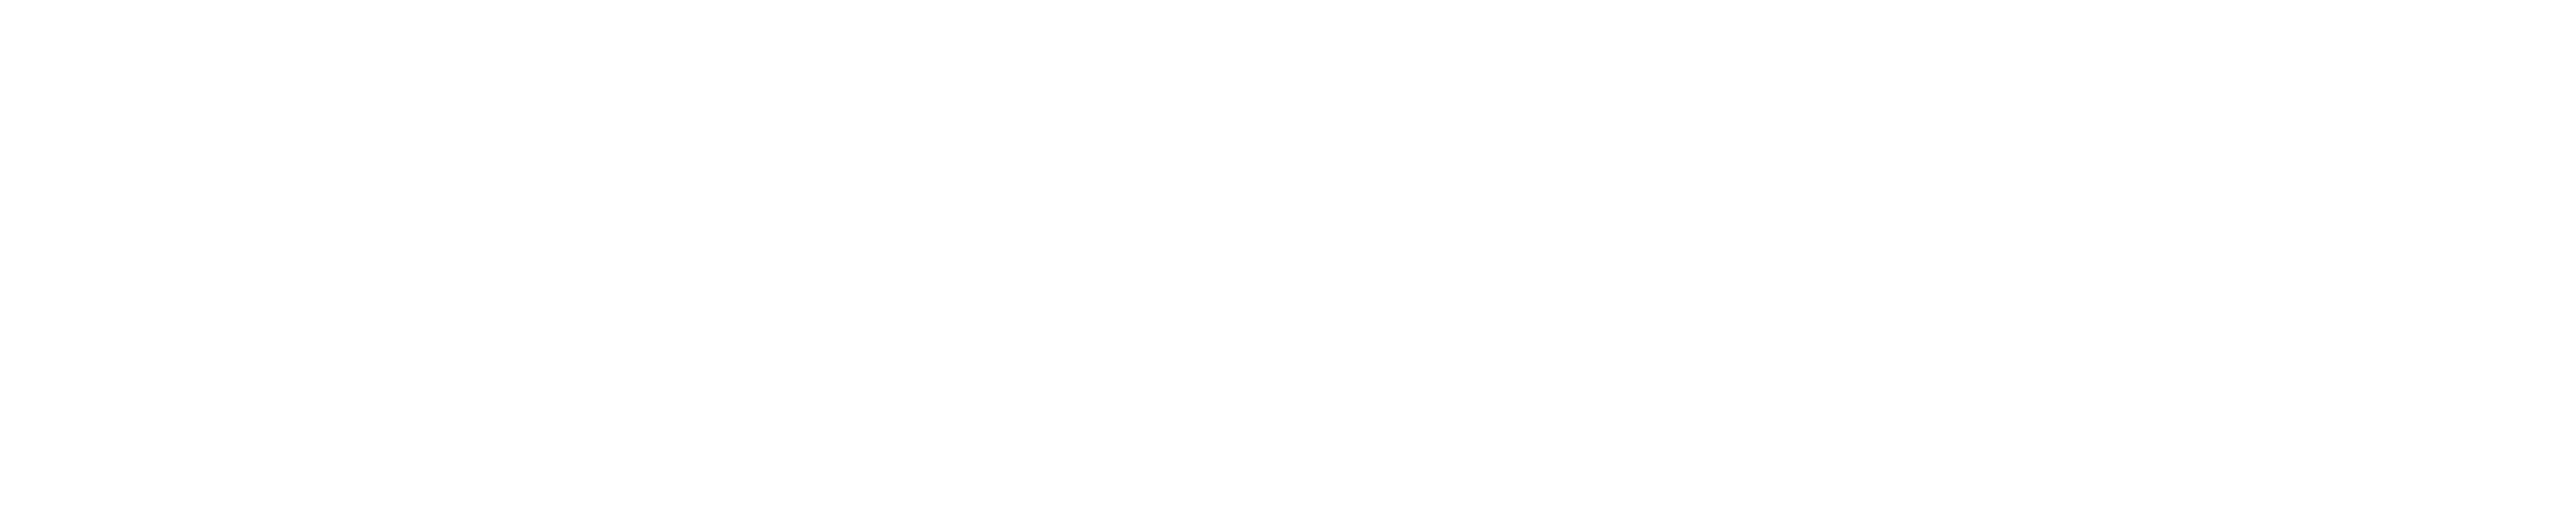 Amazon_NCCU_Logo-1